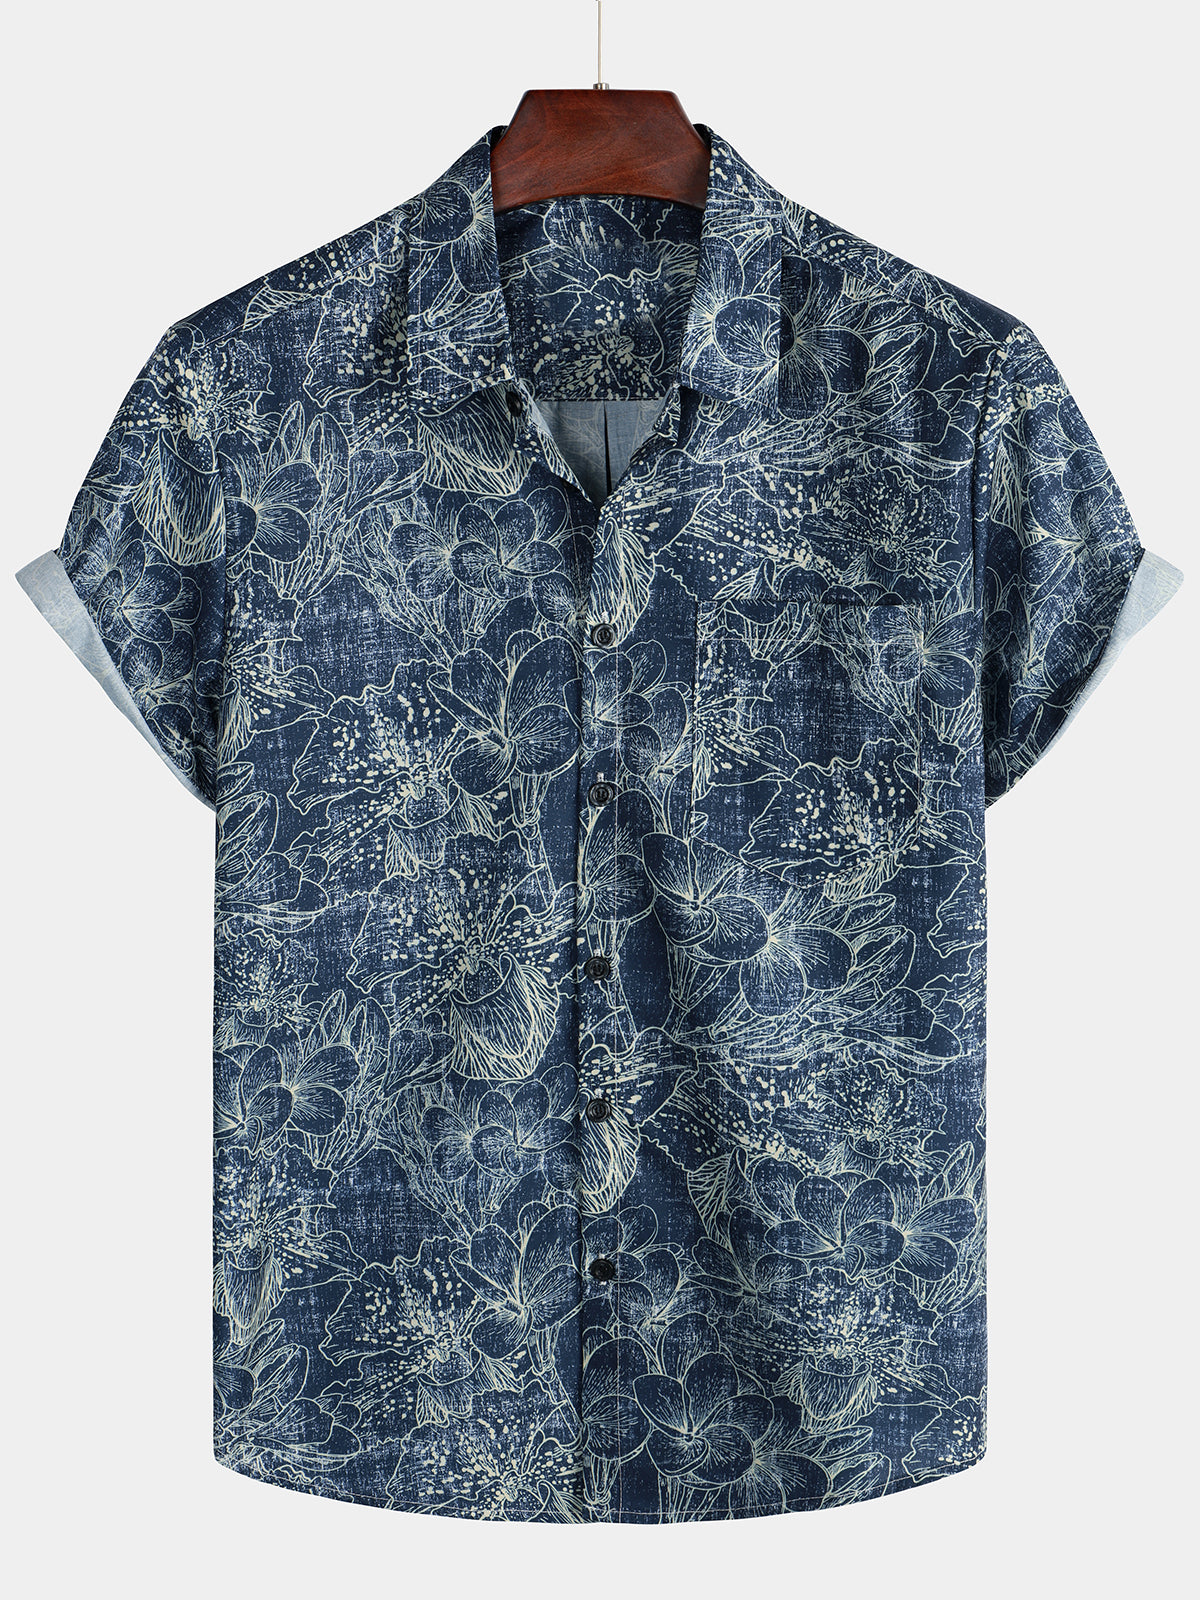 Men's Retro Floral Print Pocket Vacation Short Sleeve Vintage Flowers Navy Blue Shirt